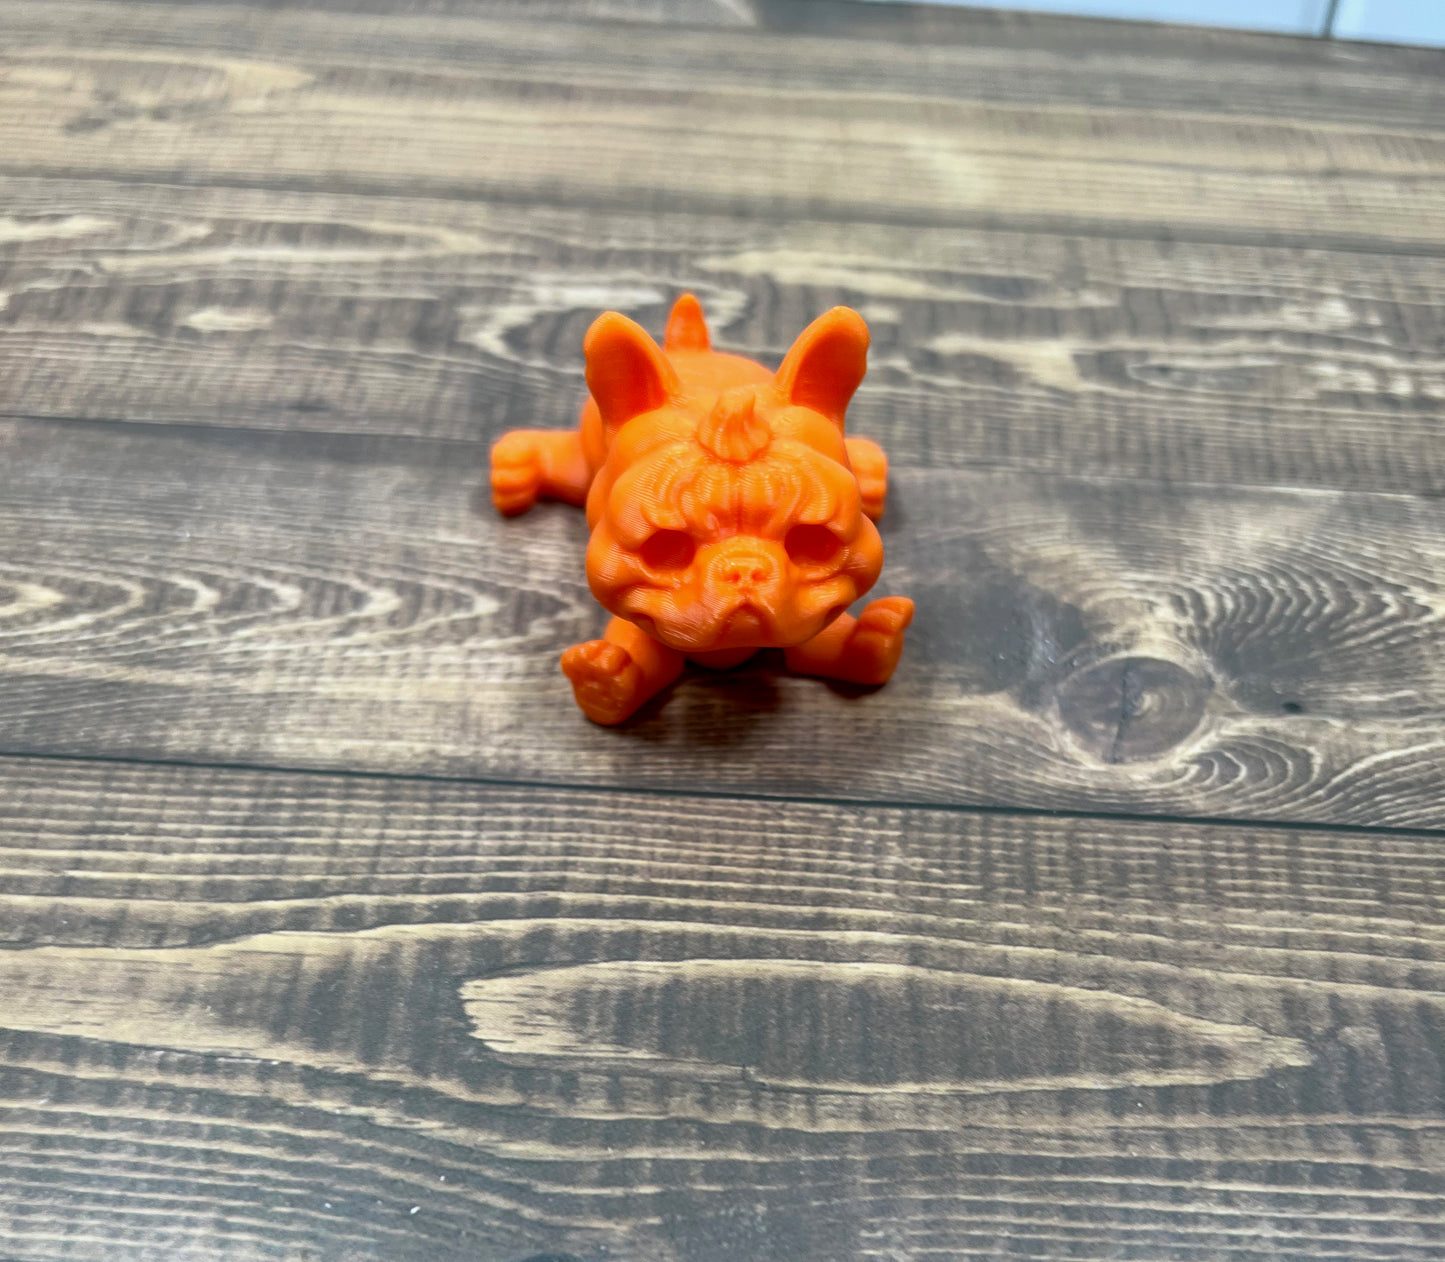 3D Printed Articulated Pumpkin Dog Decoration